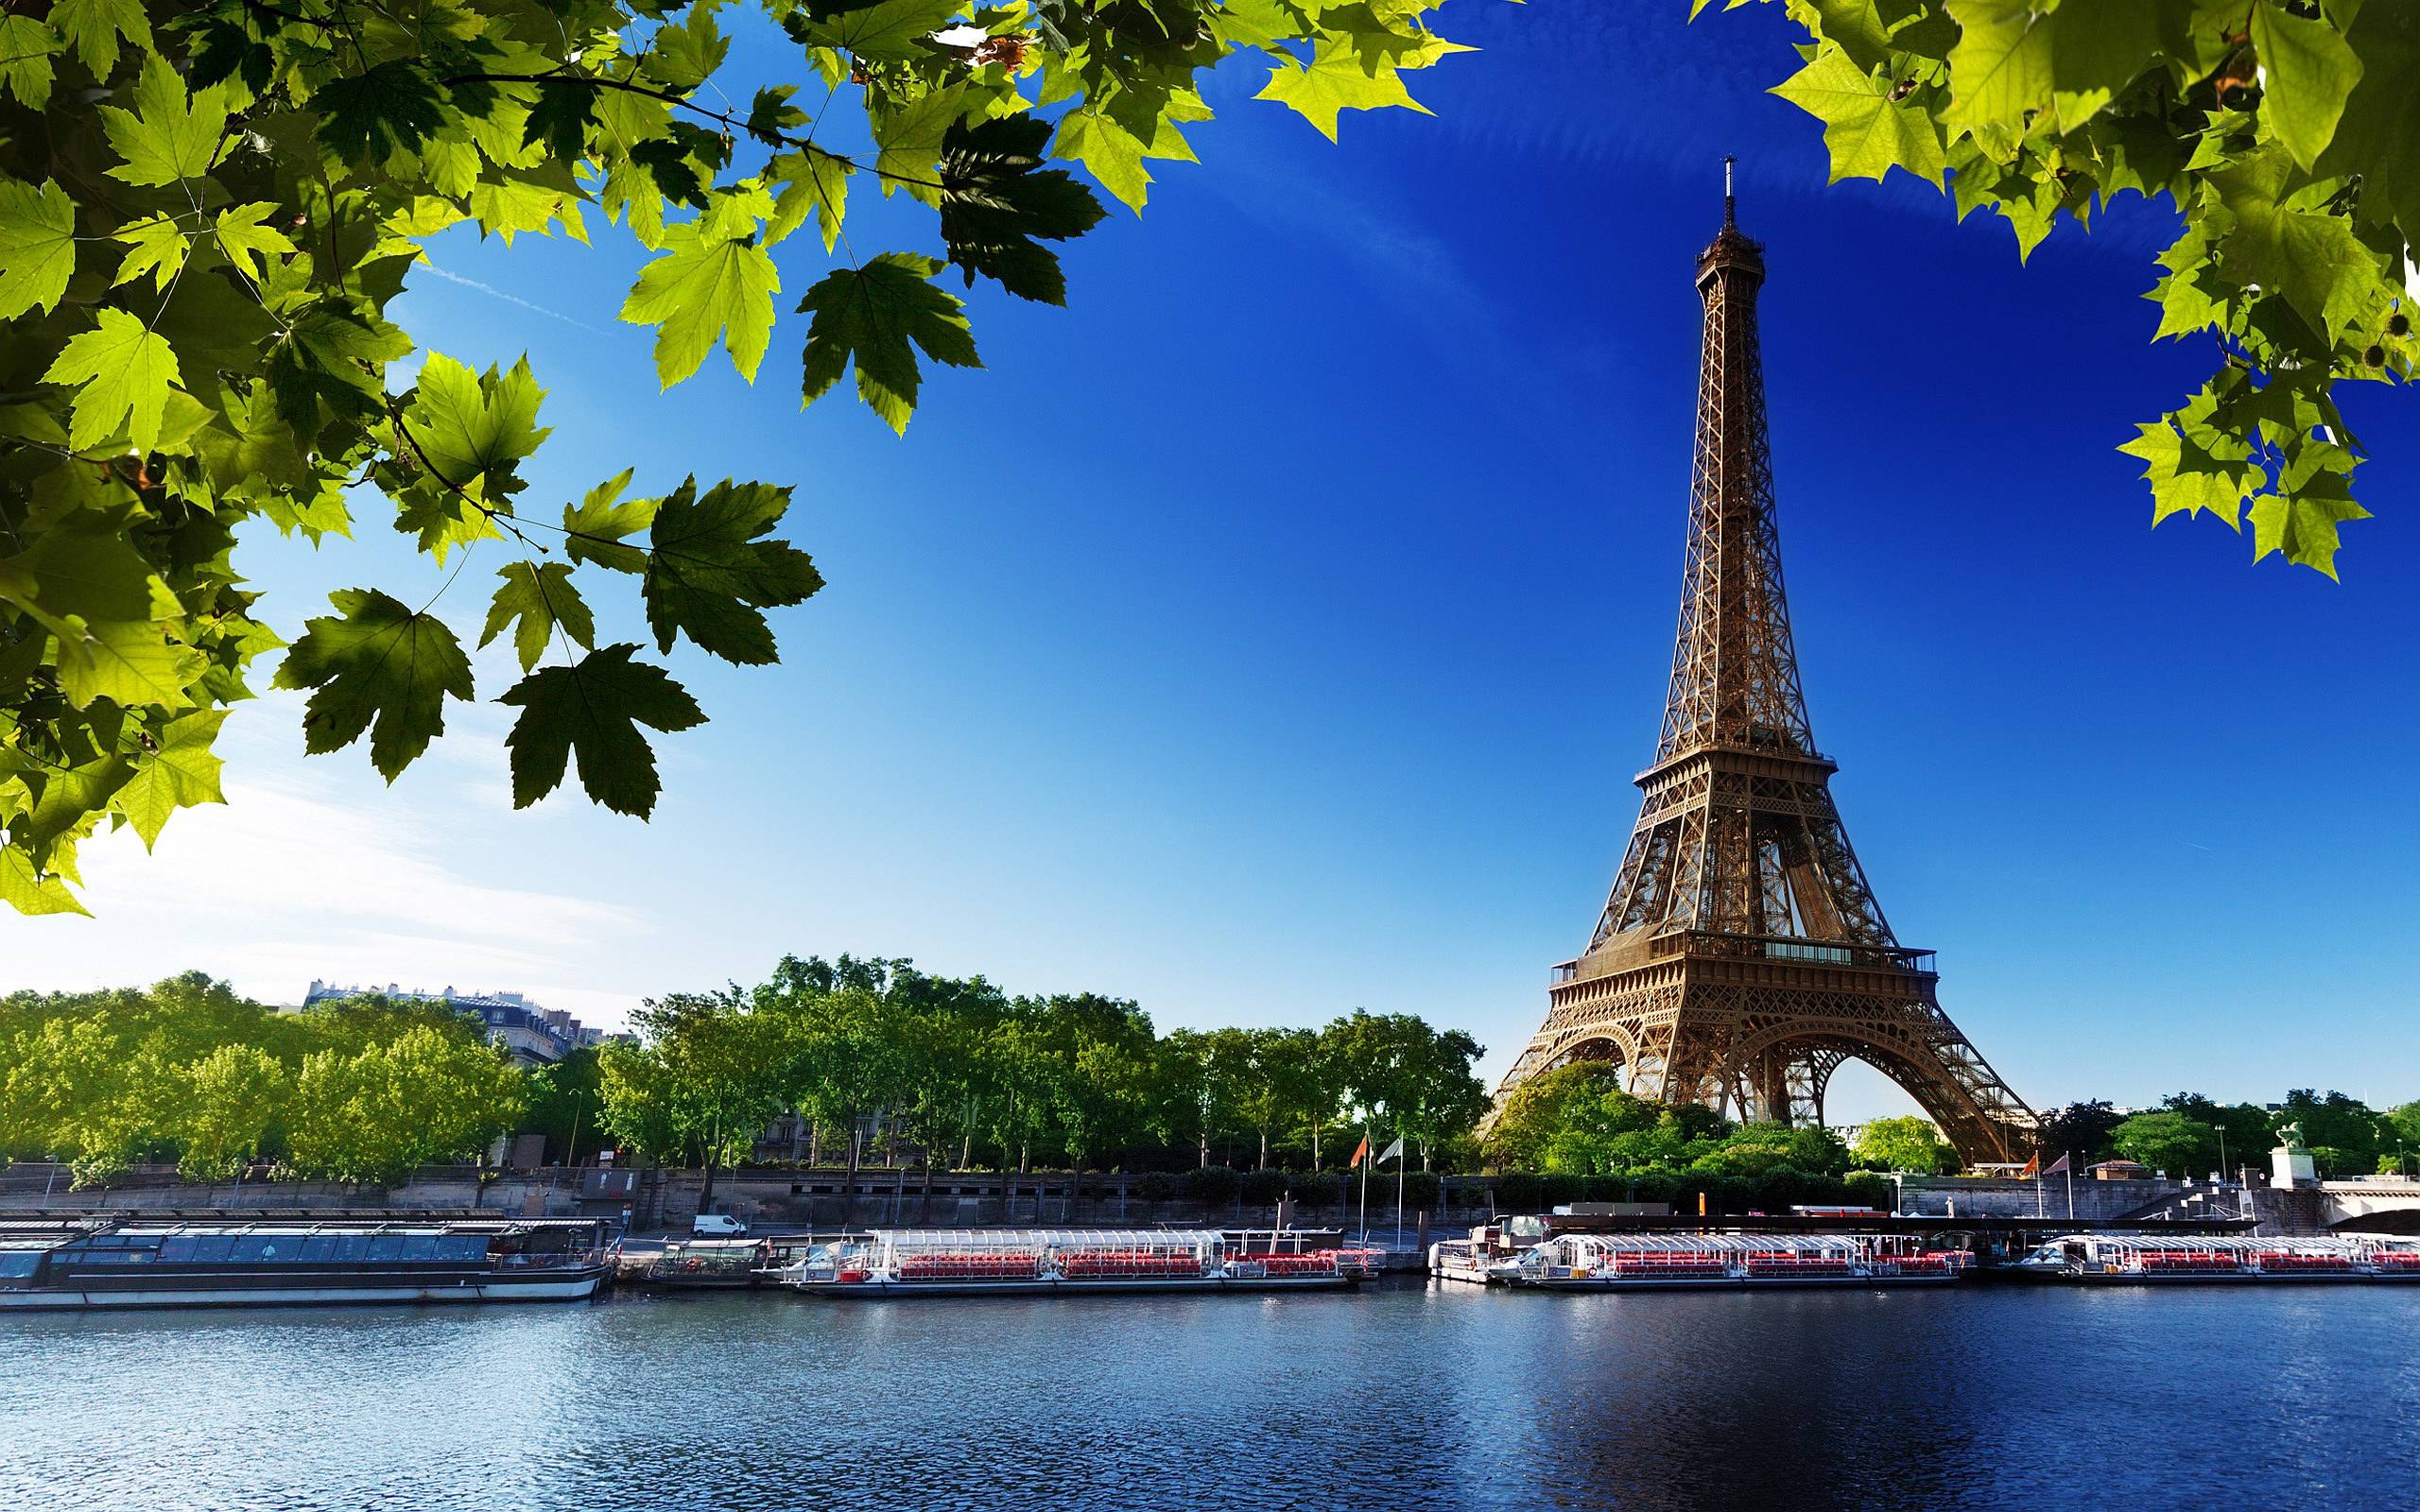 Amazing Eiffel Tower Wallpaper 8276 2560x1600 px